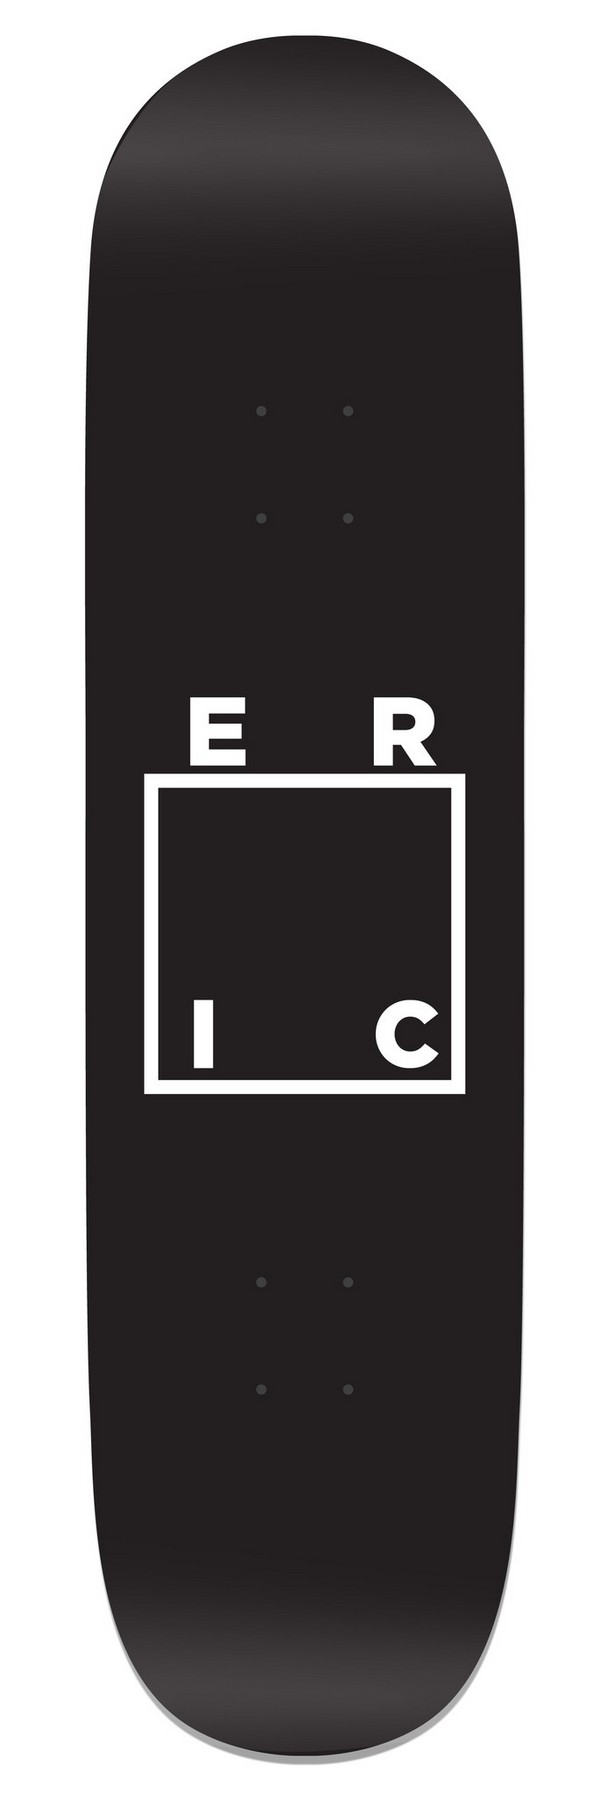 ERIC_LOGO_DECK_BLACK